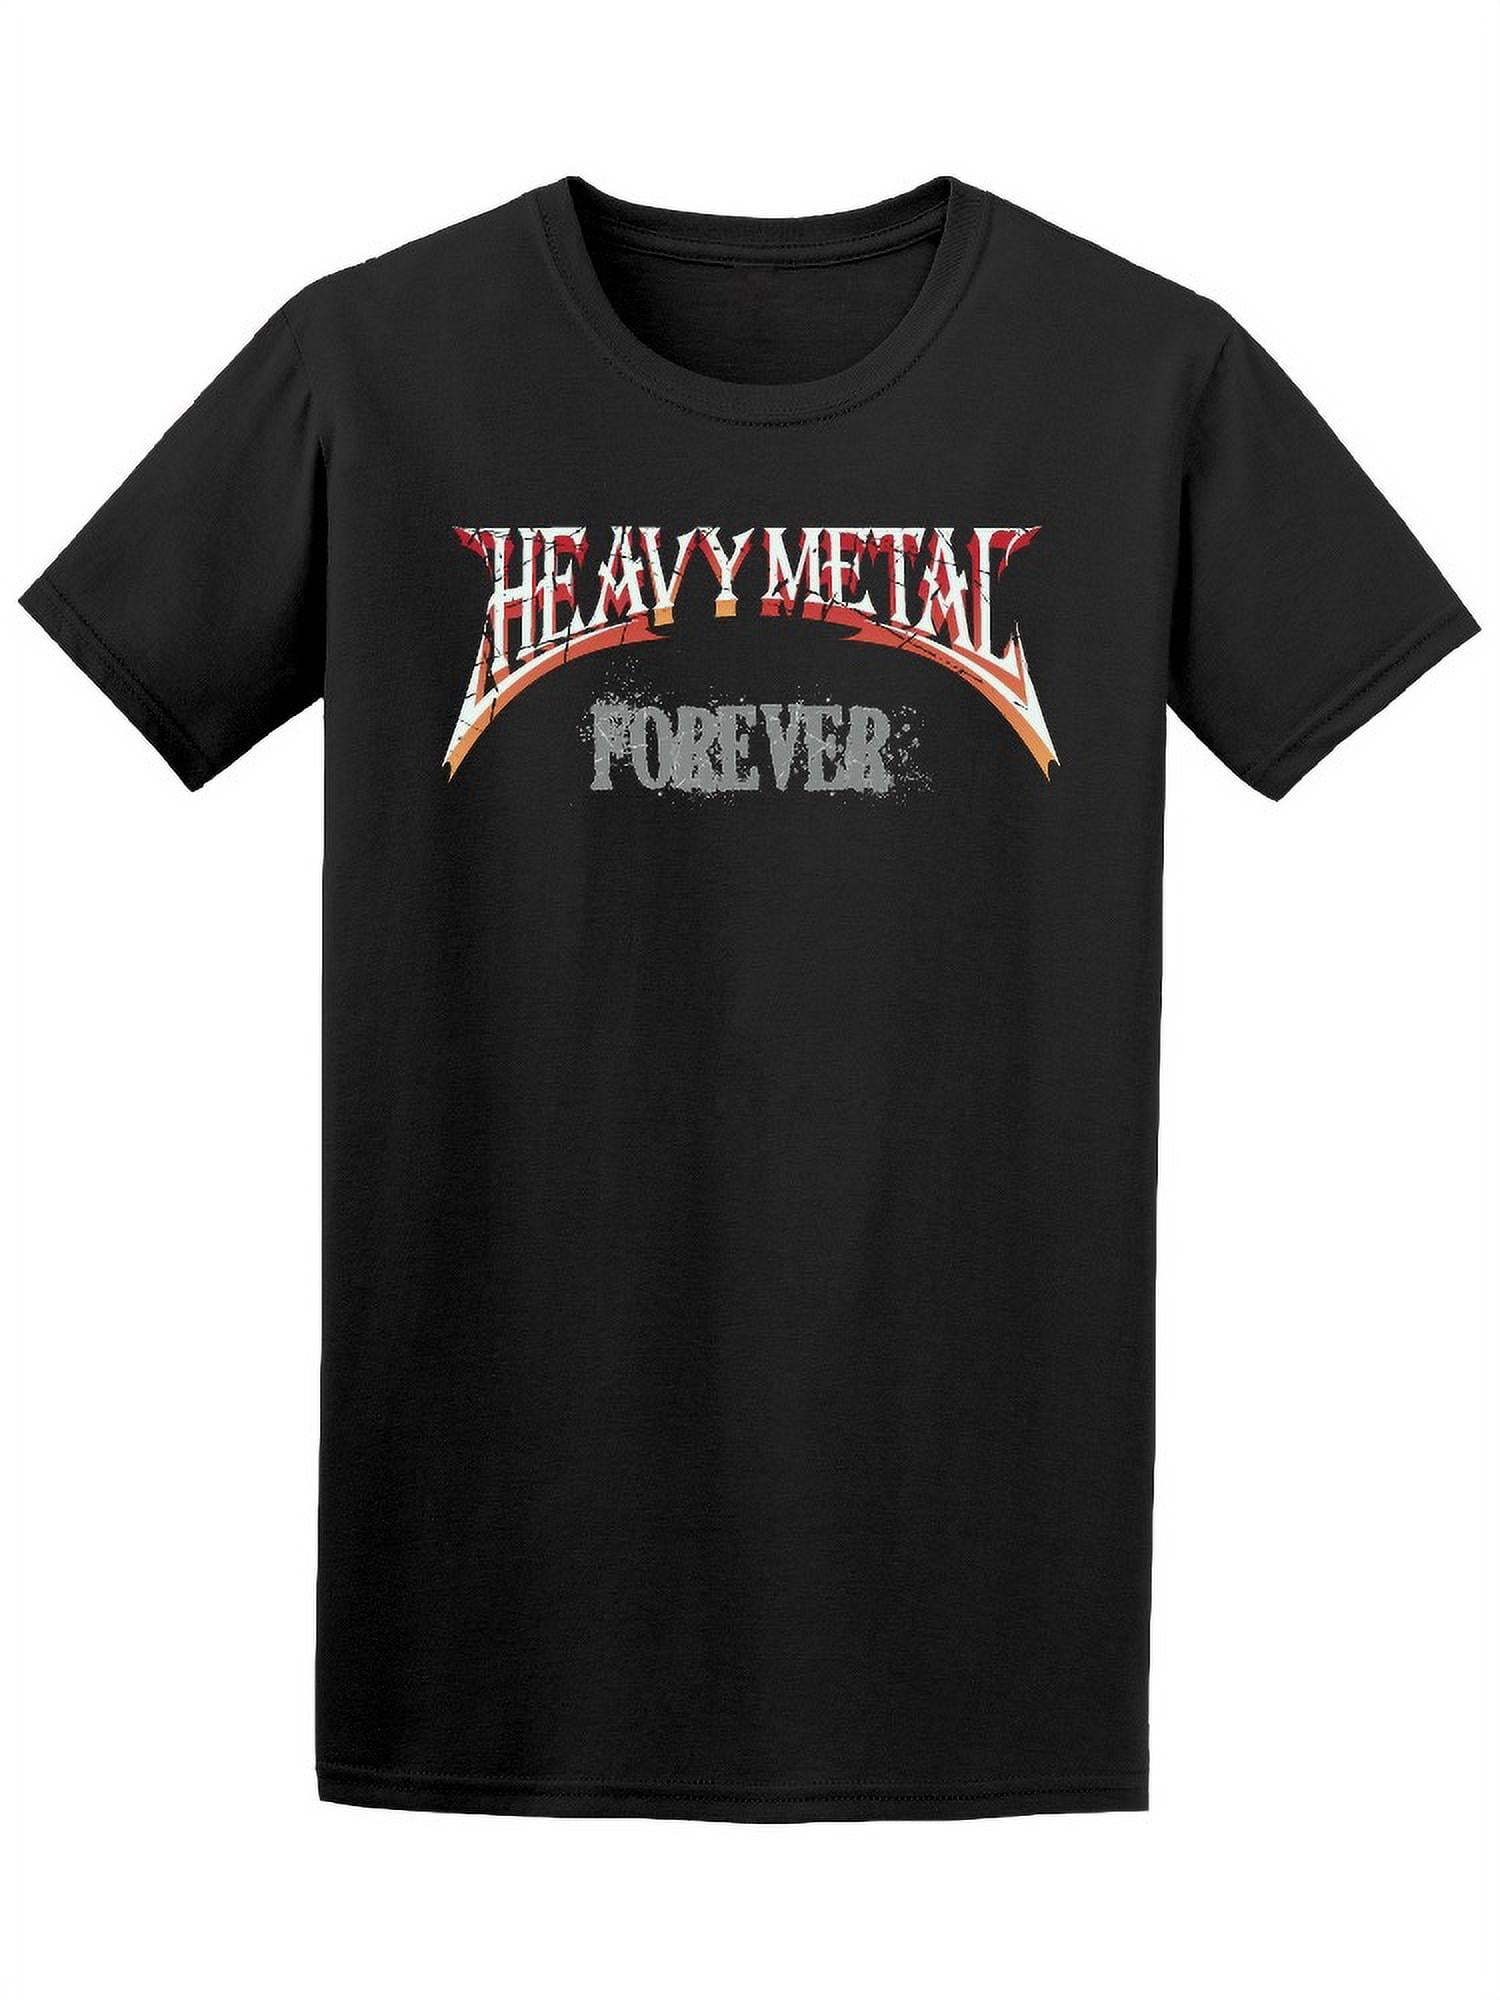 Smartprints Mens Graphic Tee - Heavy Metal Forever, Metal Lover ...